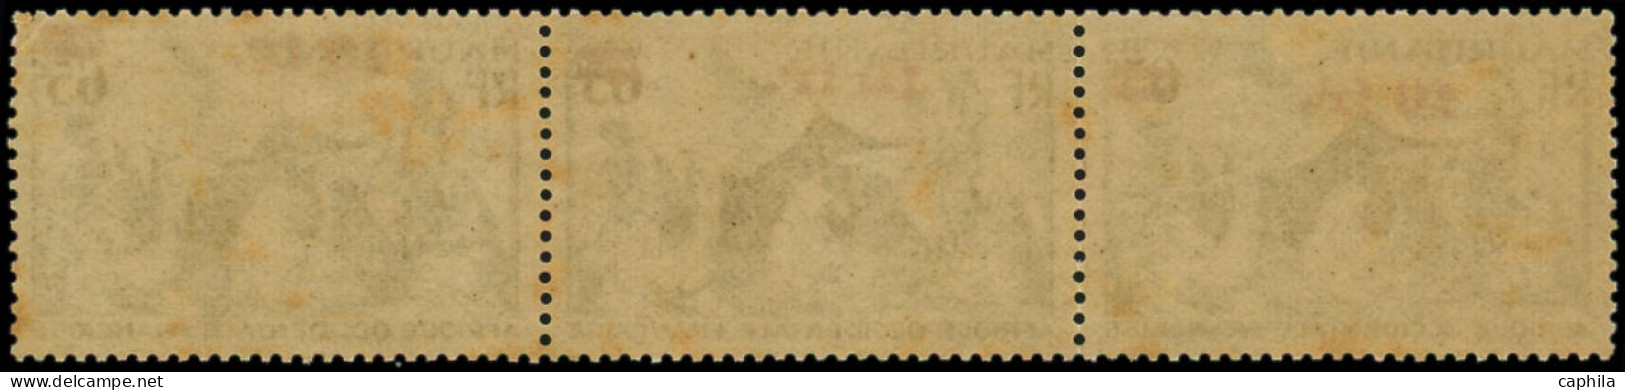 ** MAURITANIE - Poste - 136, Bande De 3 Horizontale, Surcharge Montante (brunissures) - Unused Stamps